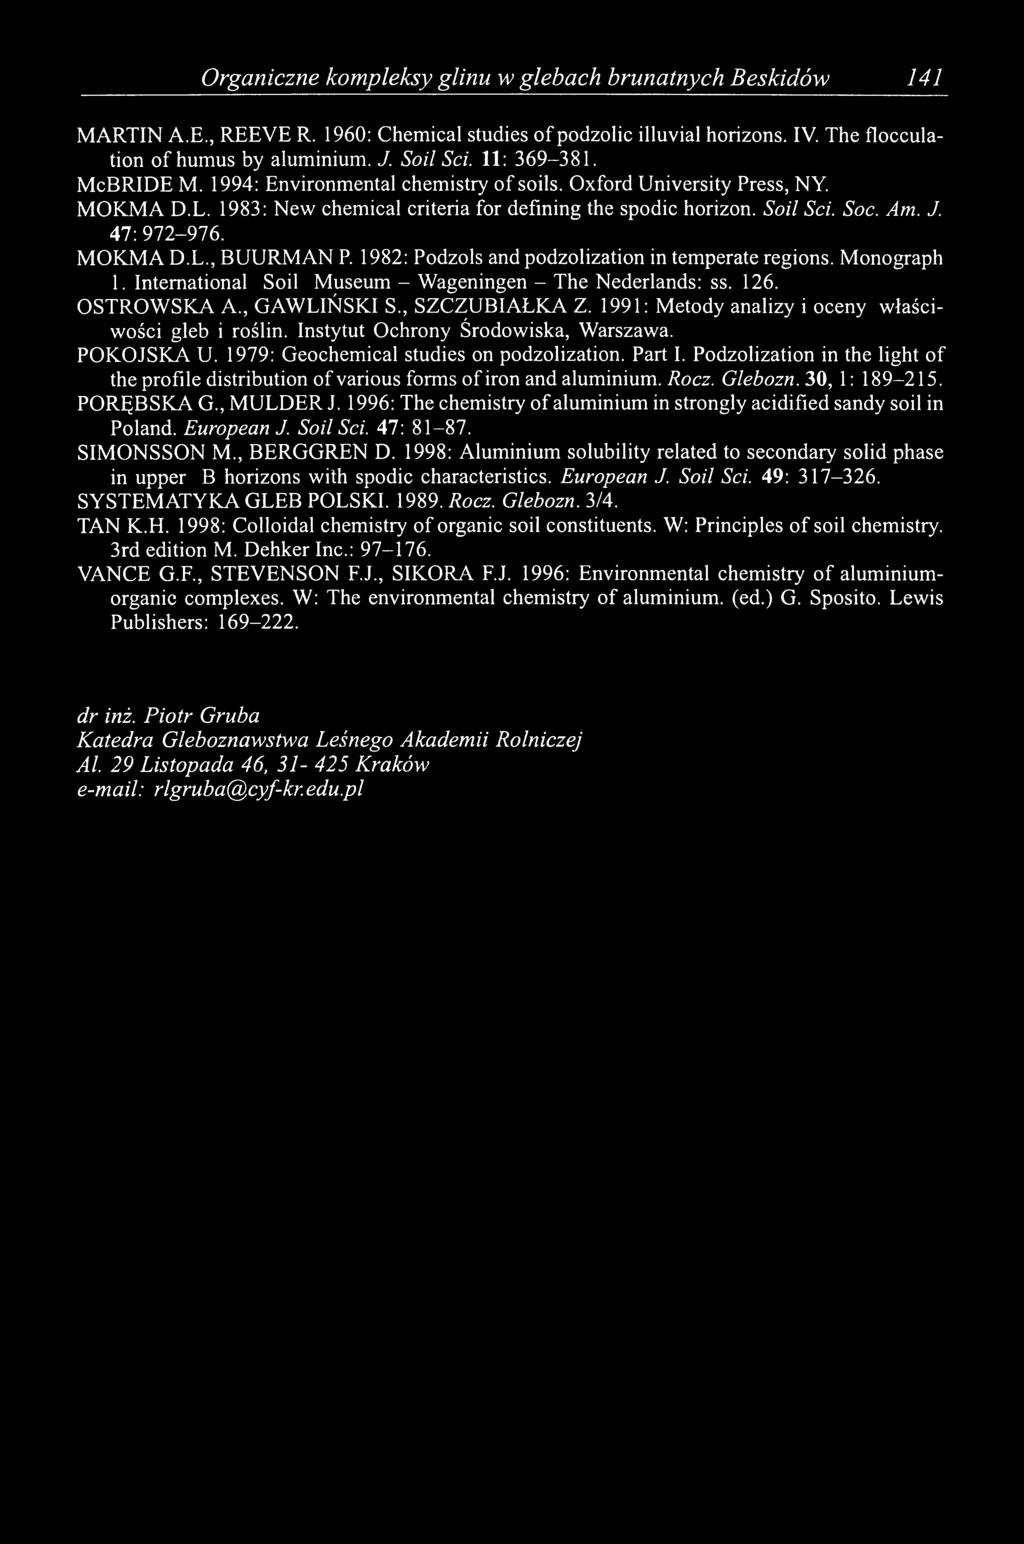 MOKMA D.L., BUURMAN P. 1982: Podzols and podzolization in temperate regions. Monograph 1. International Soil Museum - Wageningen - The Nederlands: ss. 126. OSTROWSKA A., GAWLIŃSKI S., SZCZUBIAŁKA Z.